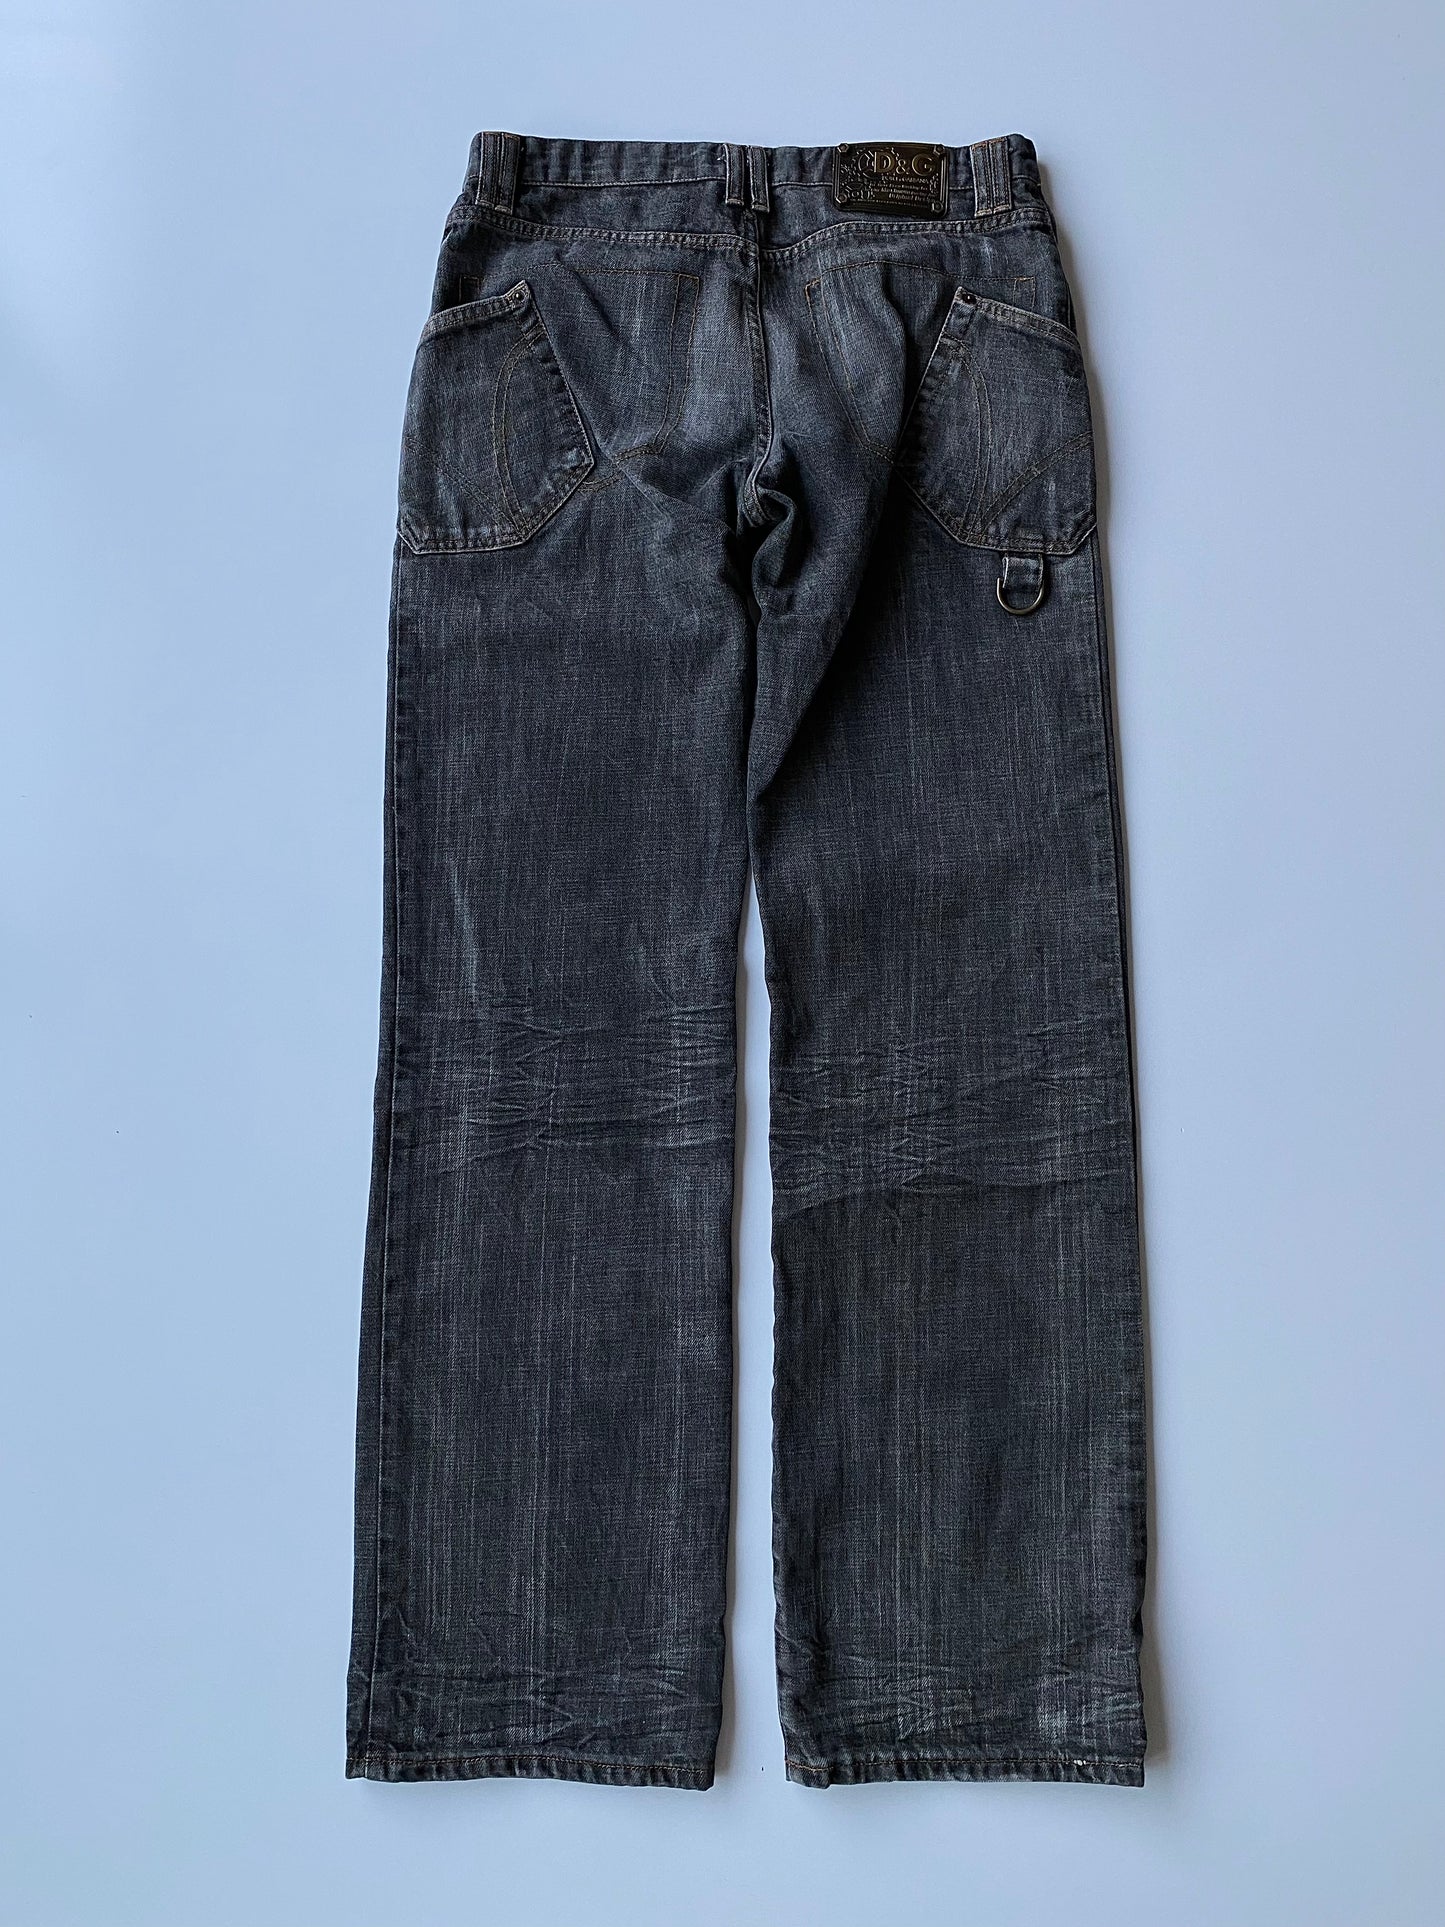 Dolce & Gabbana 2003-2004 Faded Baggy Denim Jeans